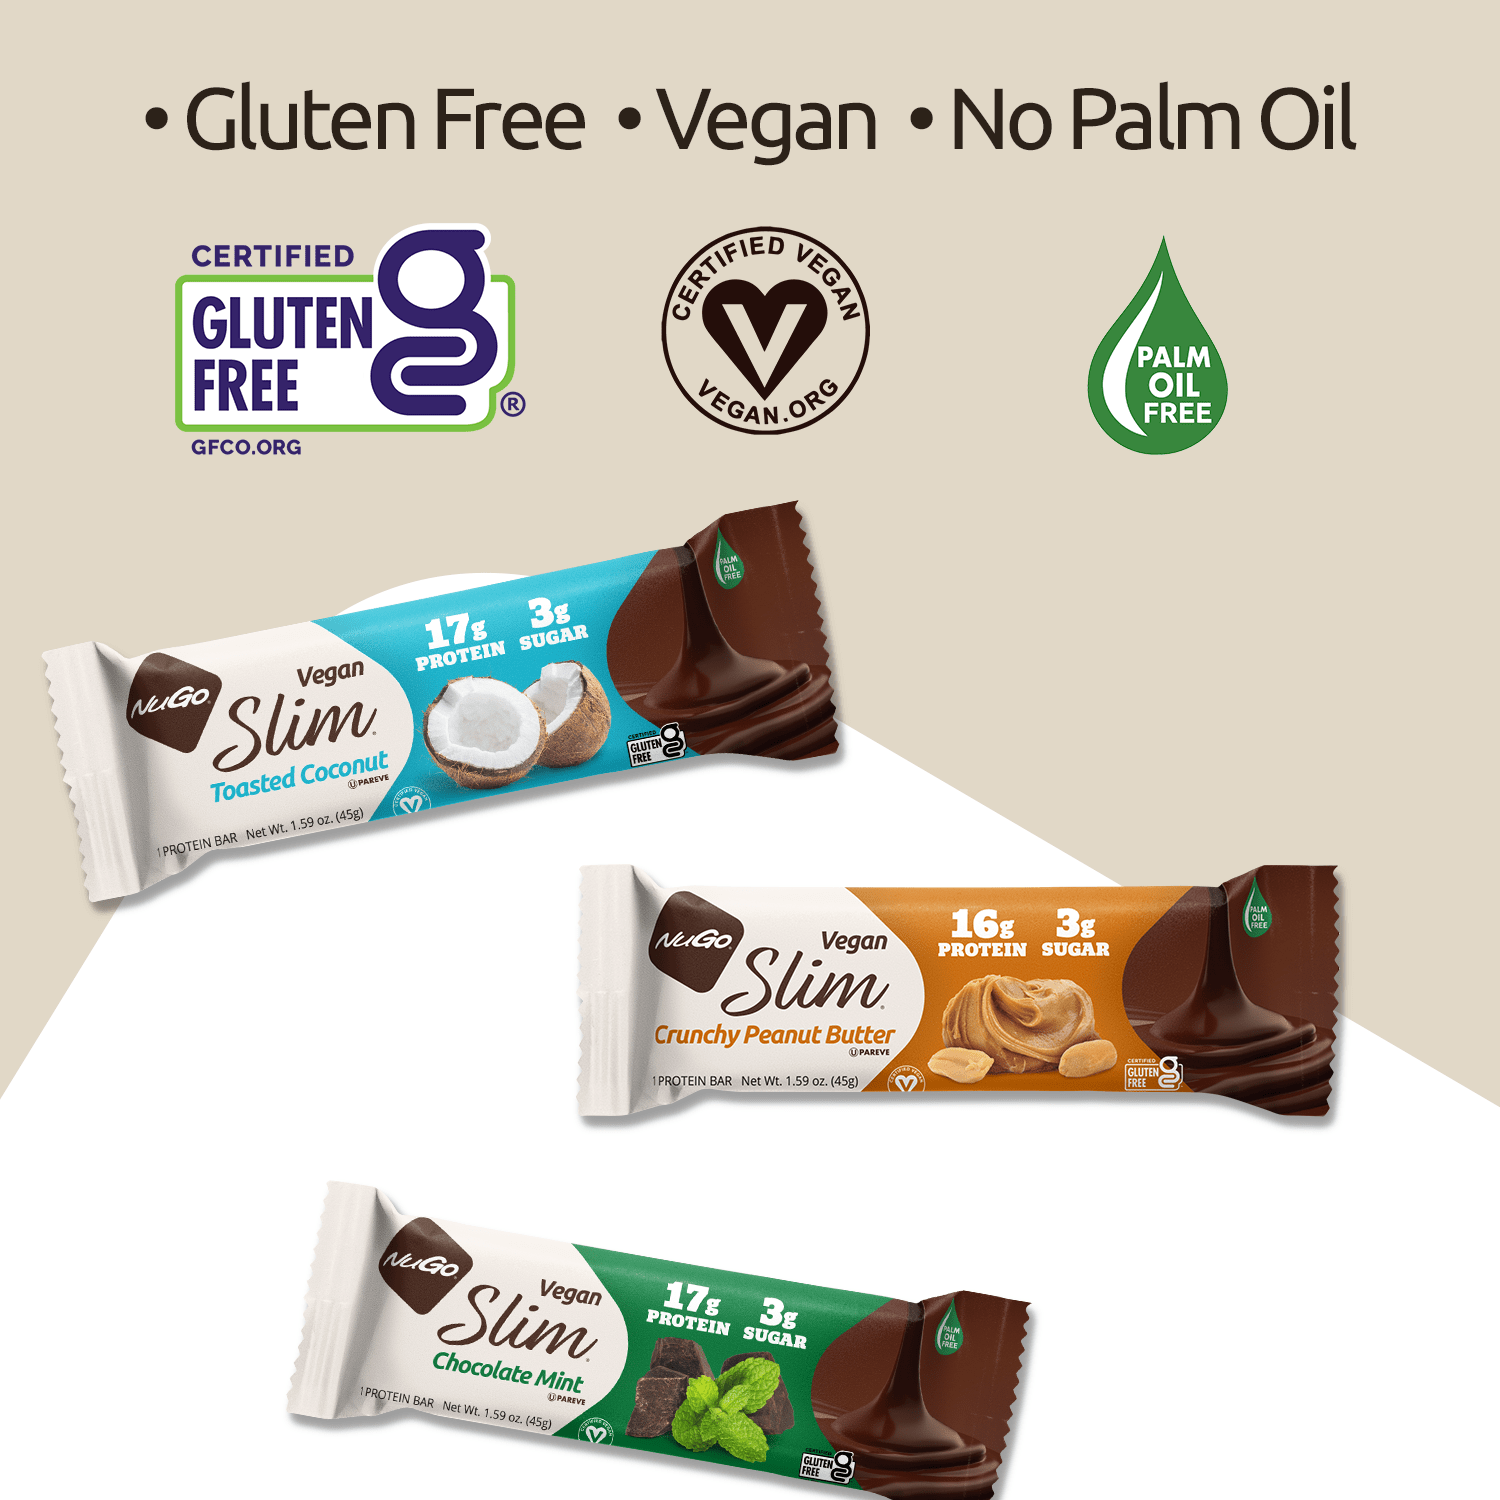 Vegan, Gluten Free, No Palm Oil Text Image